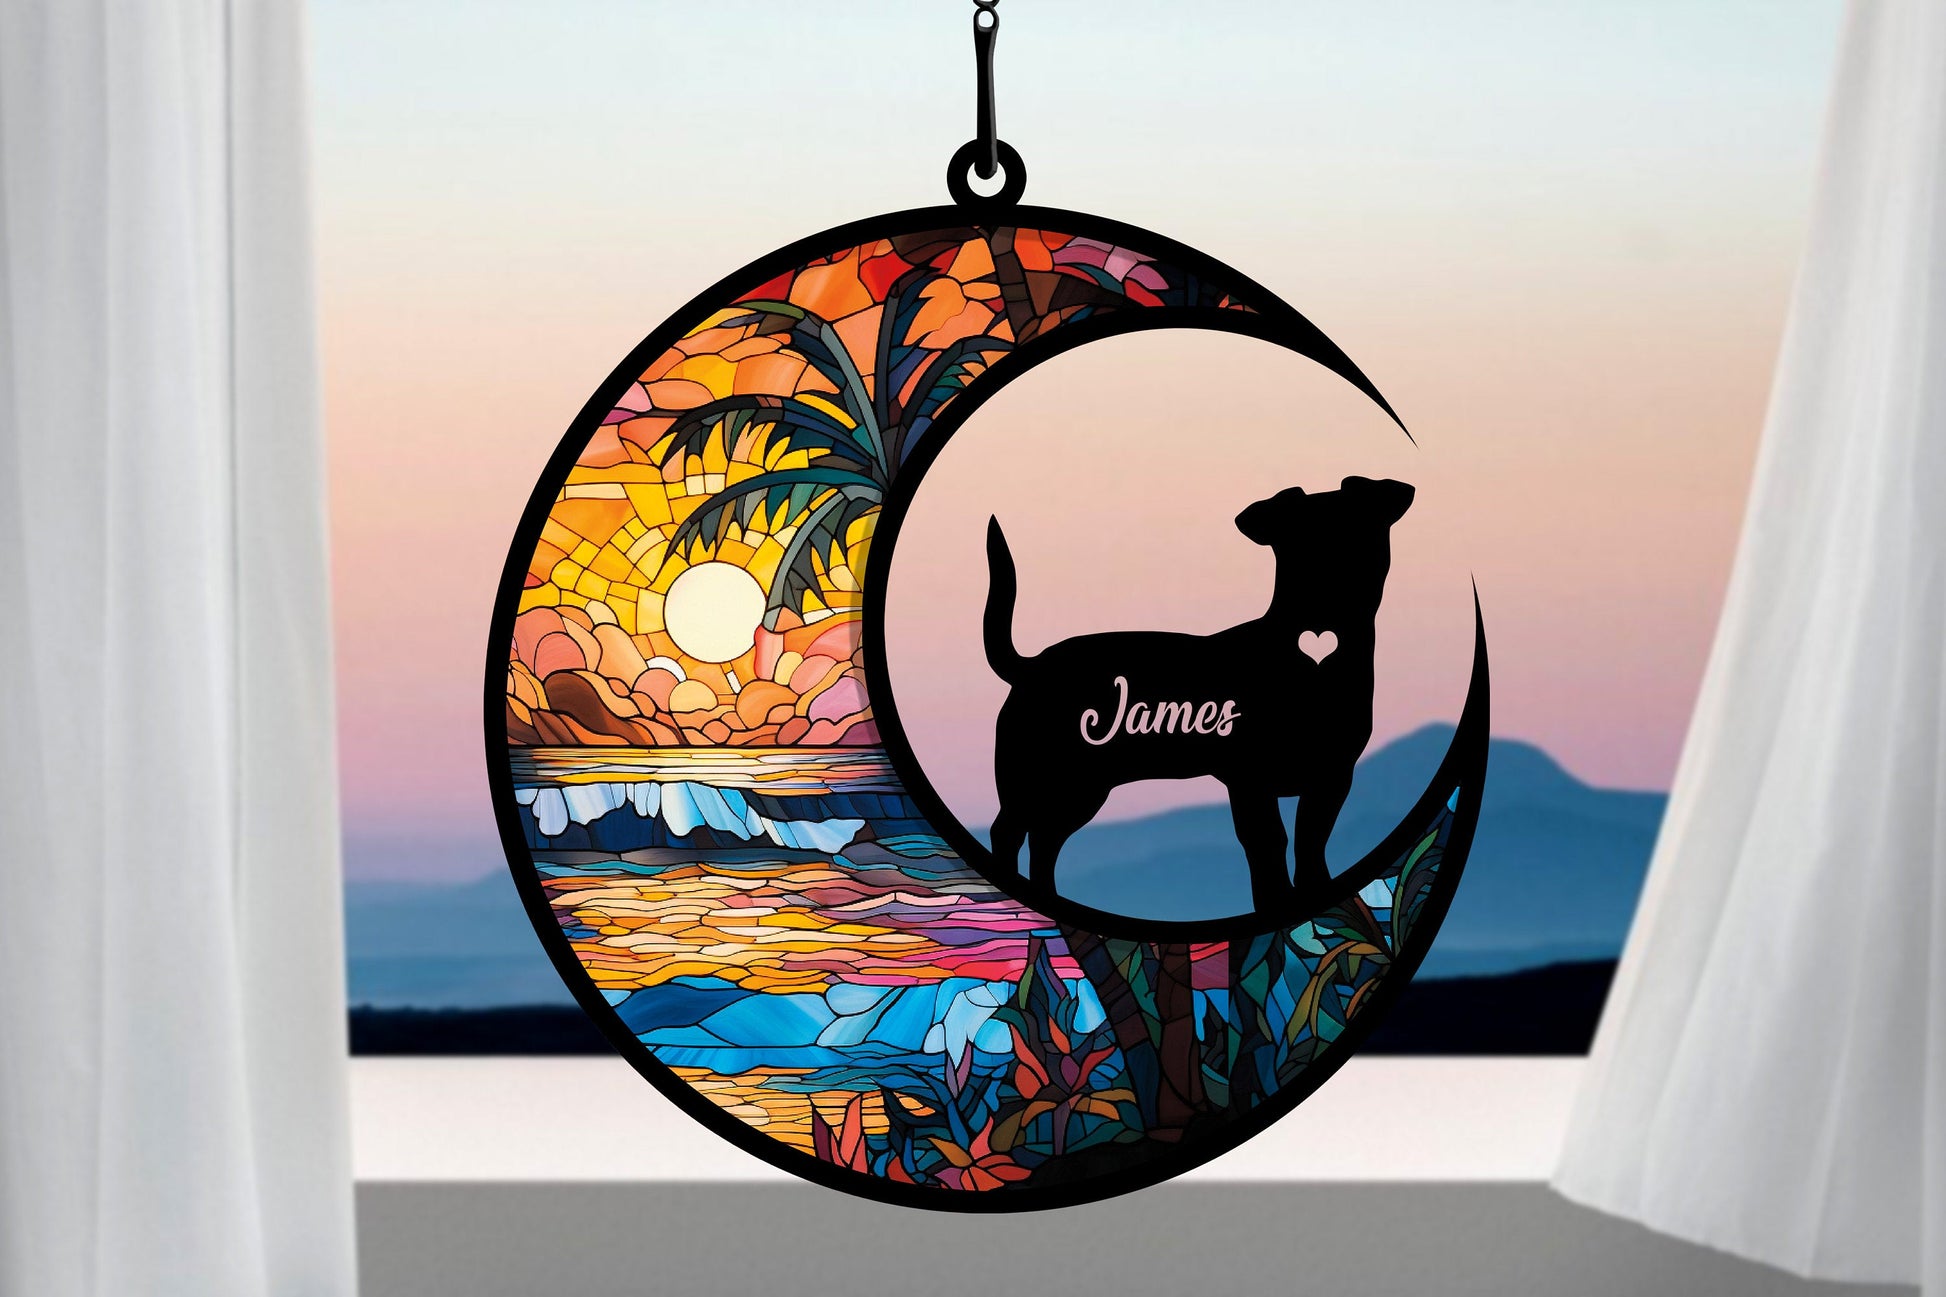 Personalized Dog Suncatcher Ornament, Window Suncatcher Ornament Decor, Gift For Dog Lover Ornament, Keepsake Ornament